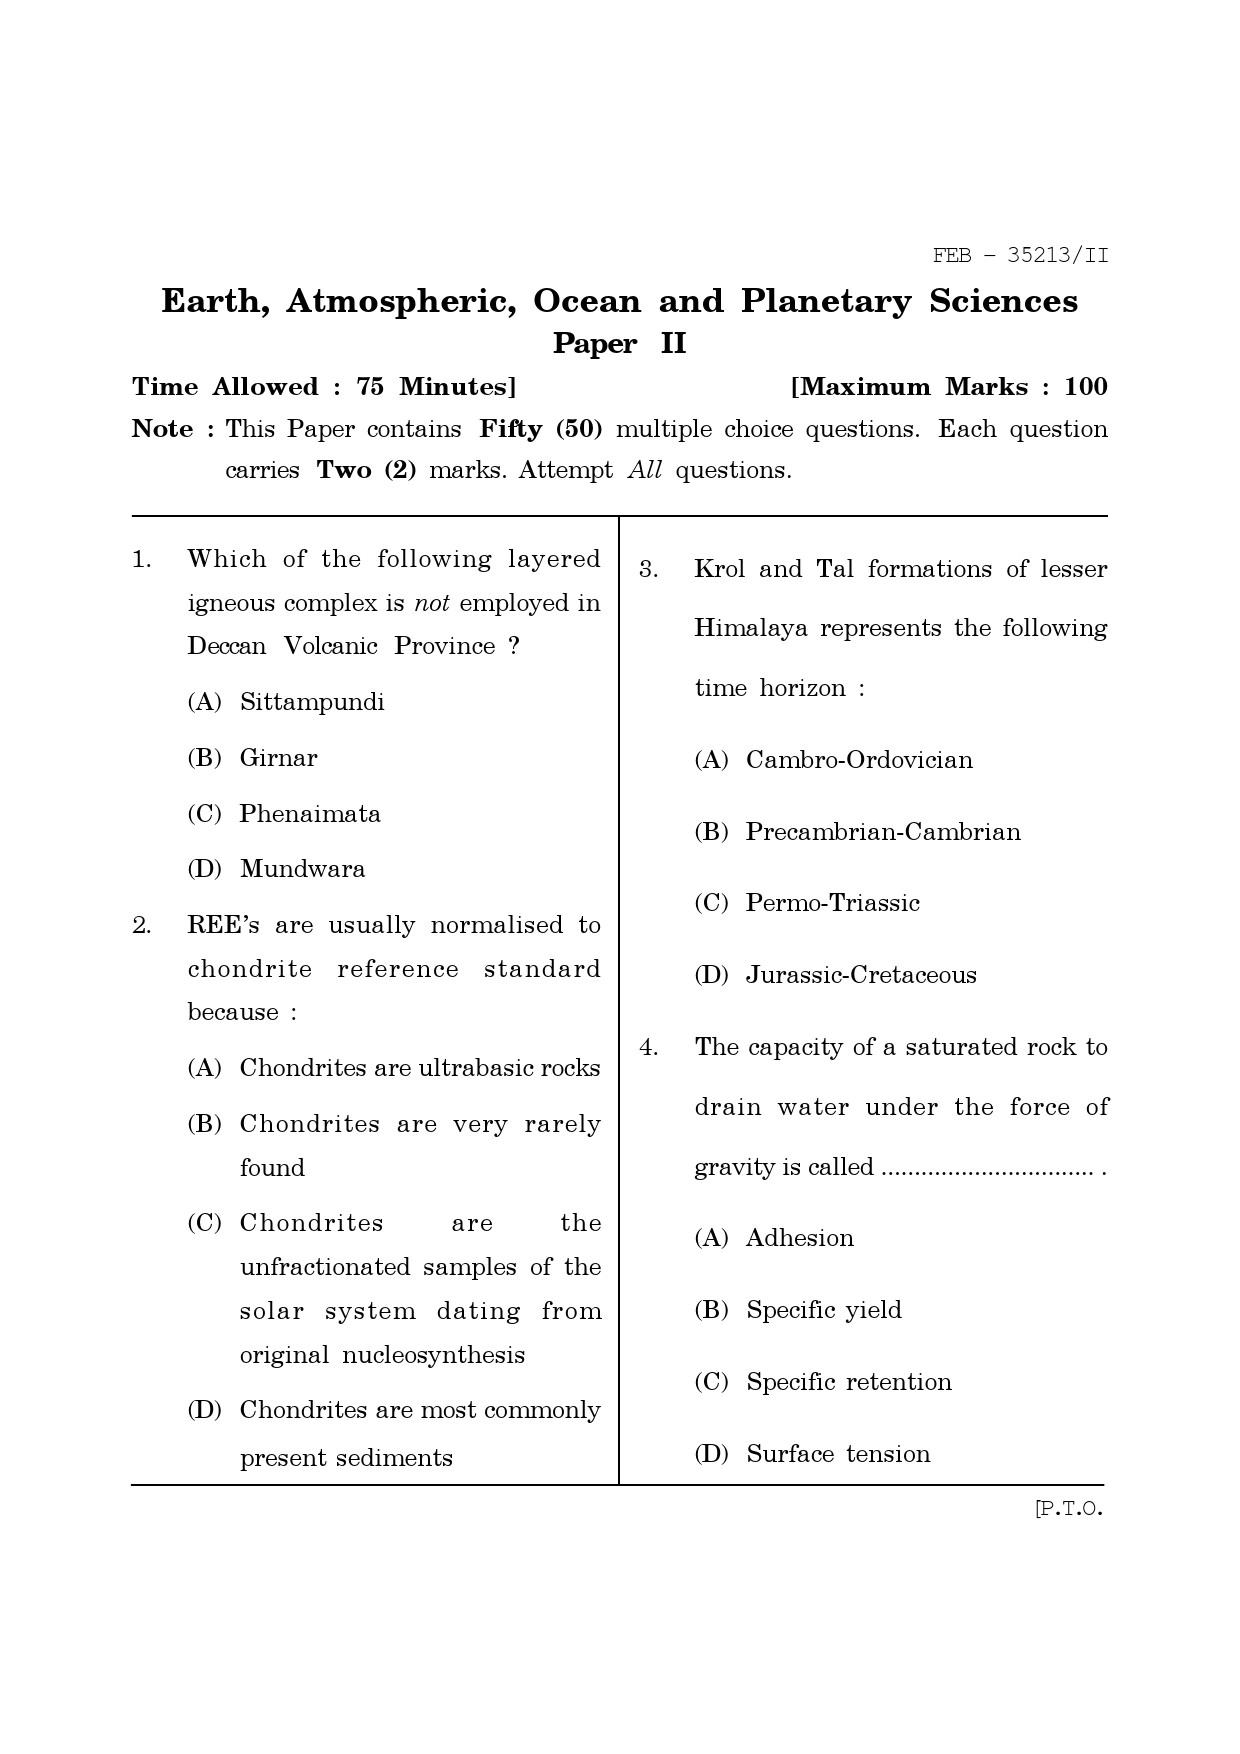 Maharashtra SET Earth Atmospheric Ocean Planetary Science Question Paper II February 2013 1